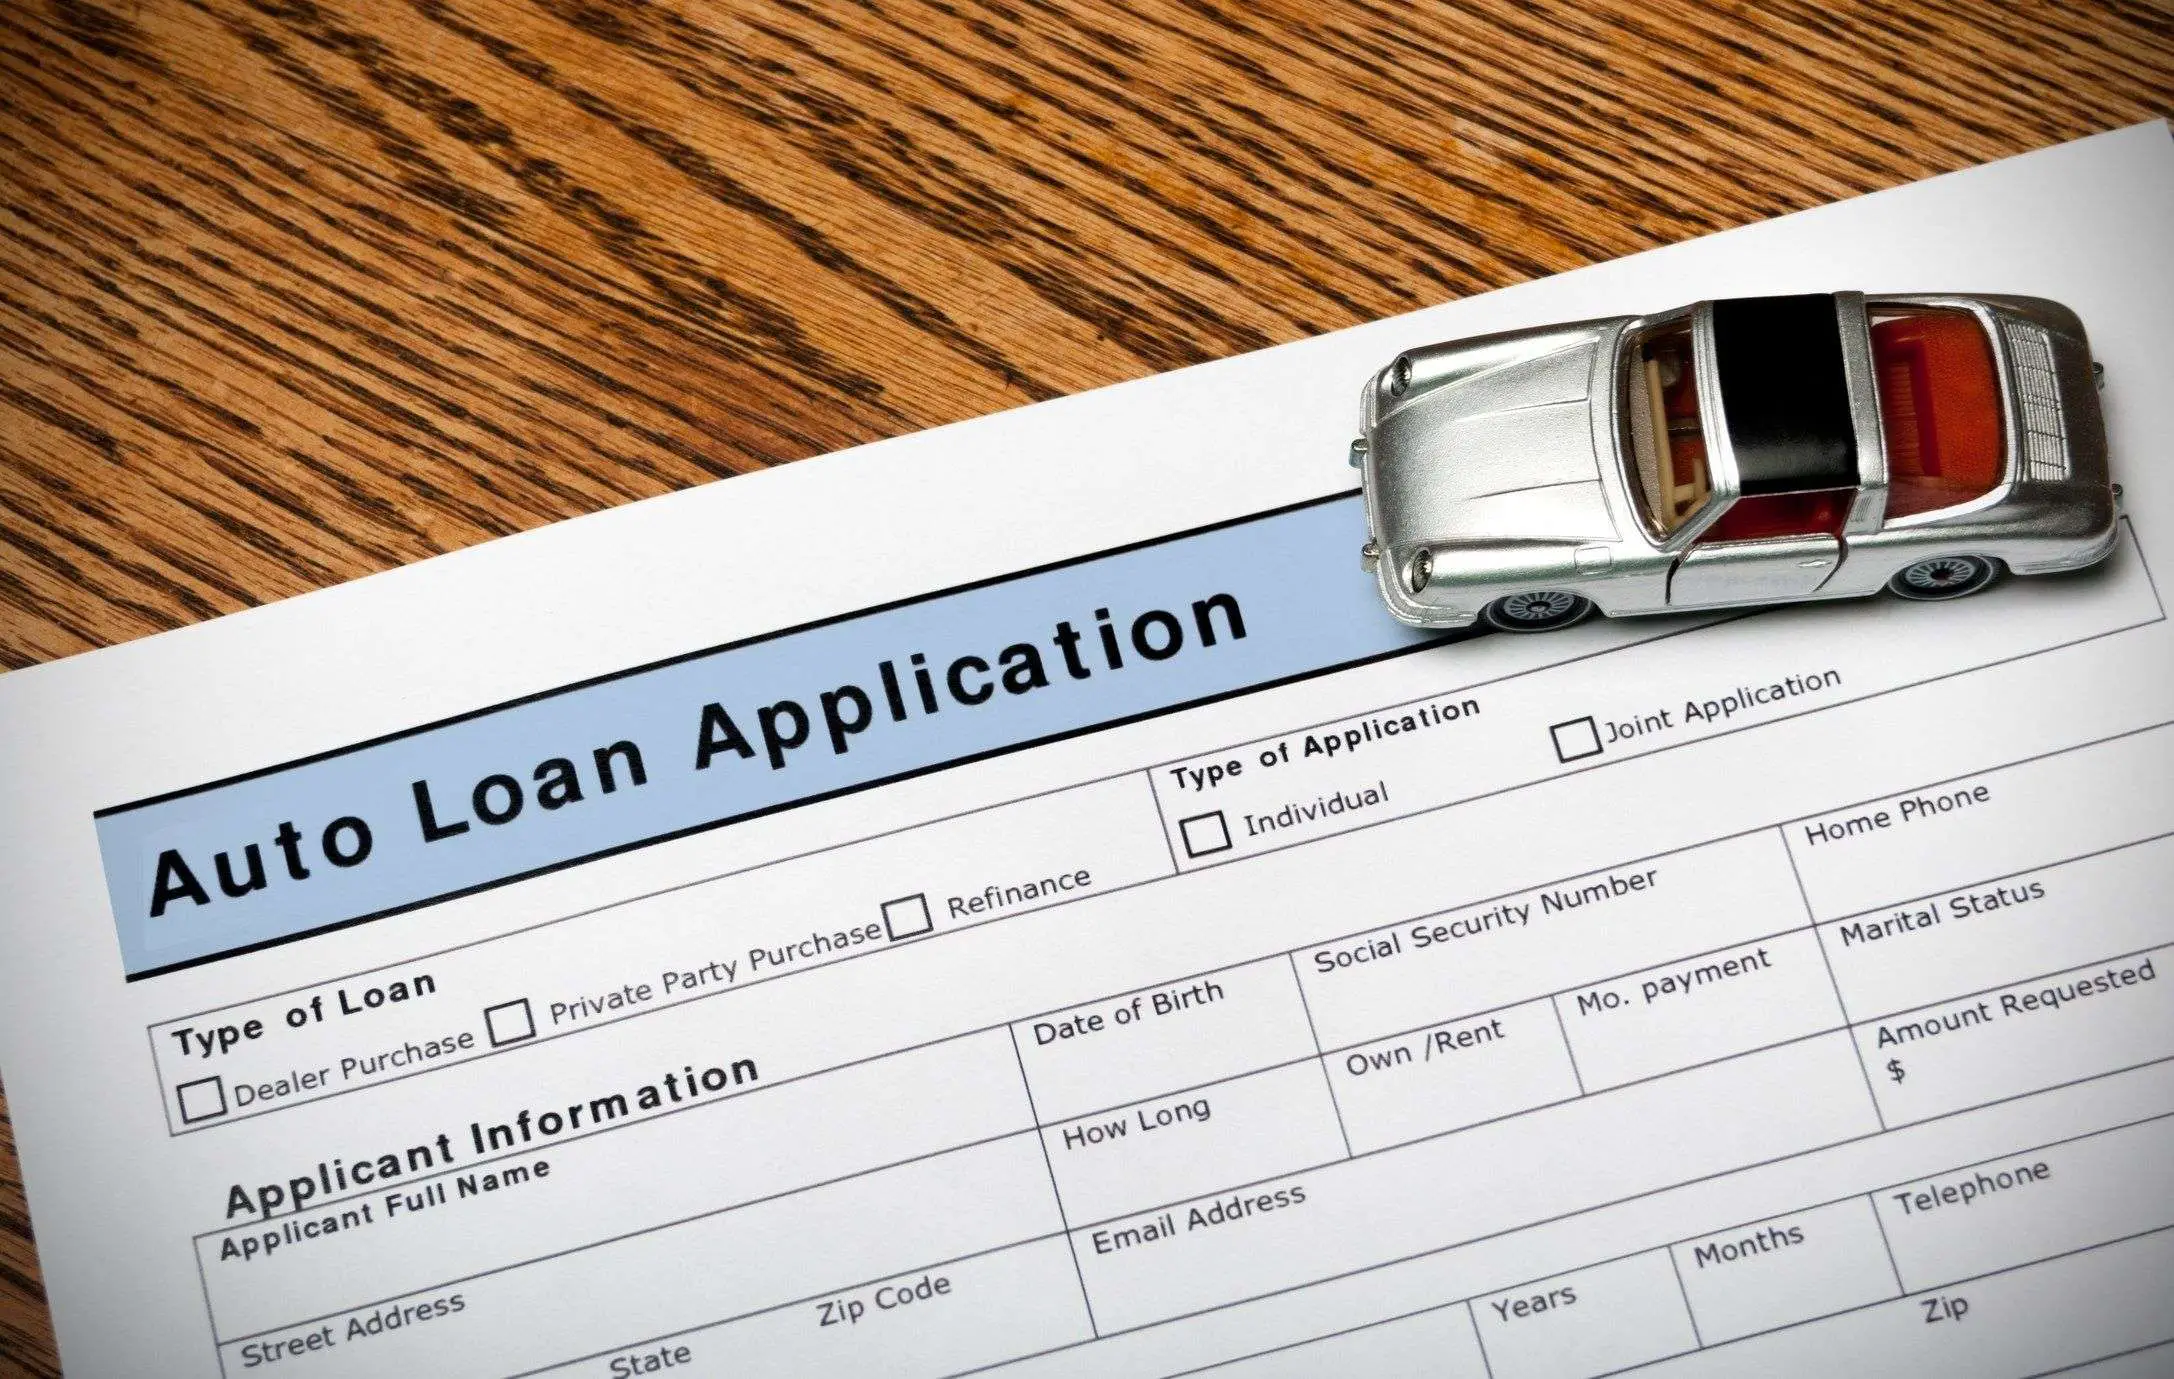 Should you refinance your auto loan?